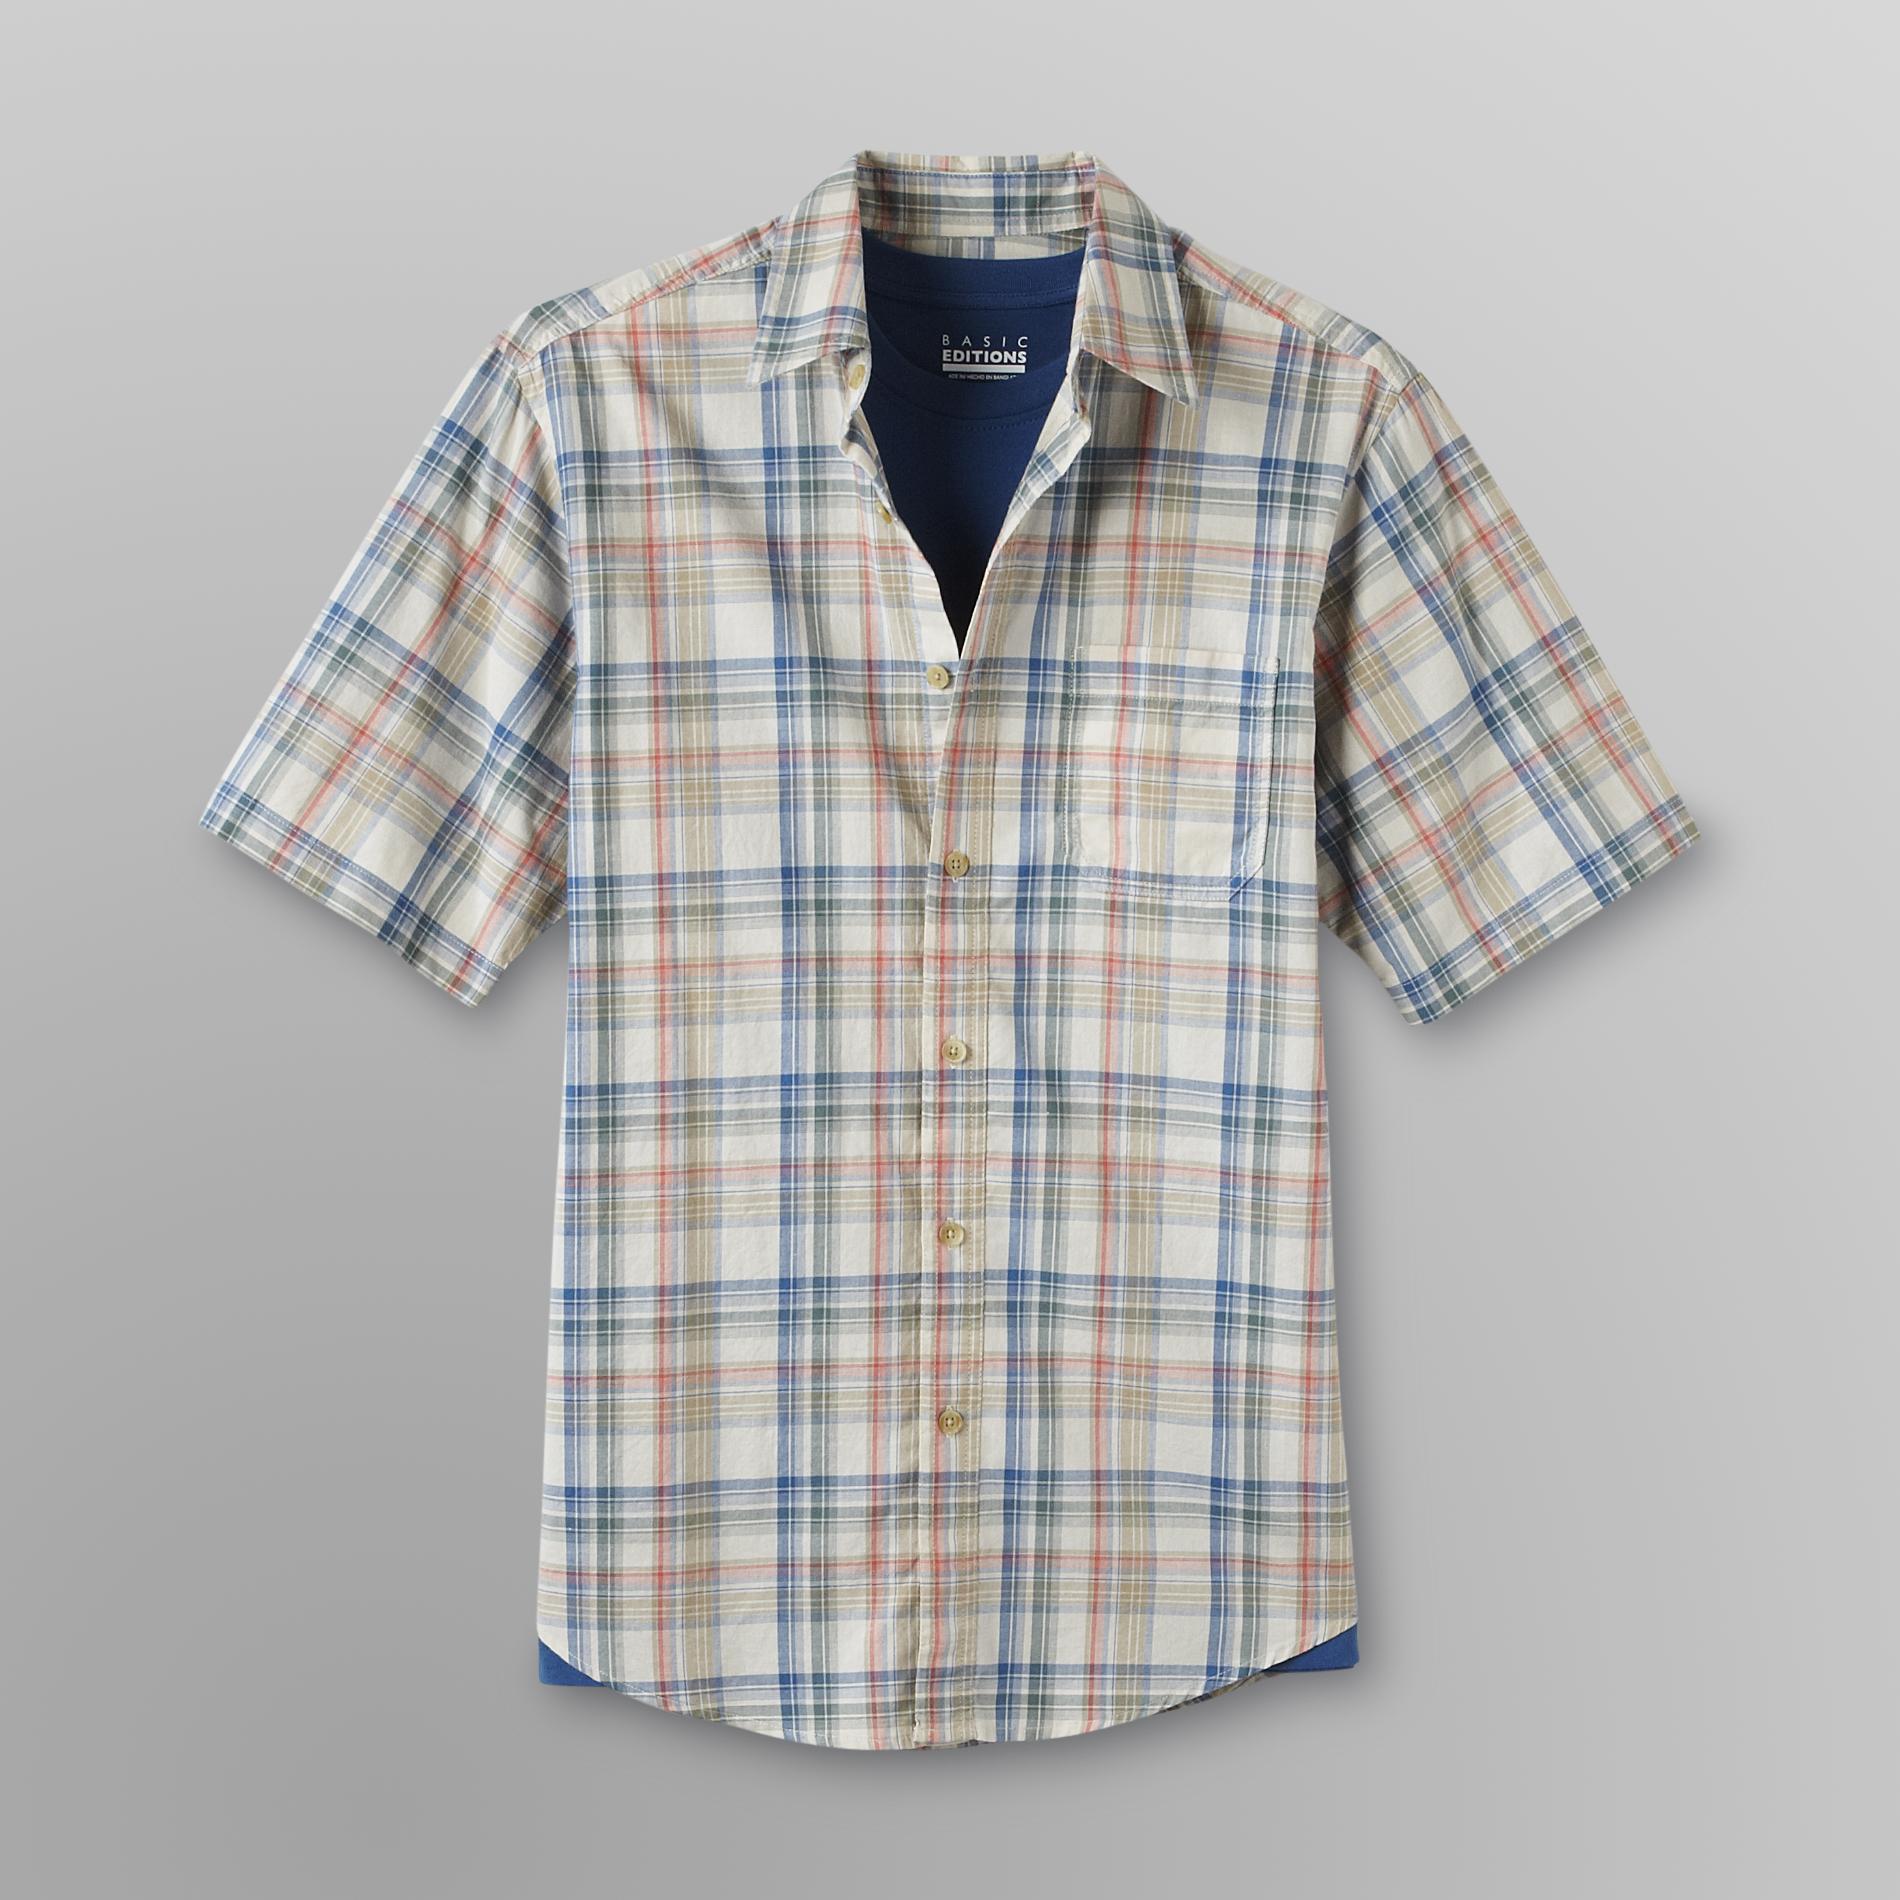 Basic Editions Men's Big & Tall Collared Shirt & T-Shirt - Plaid